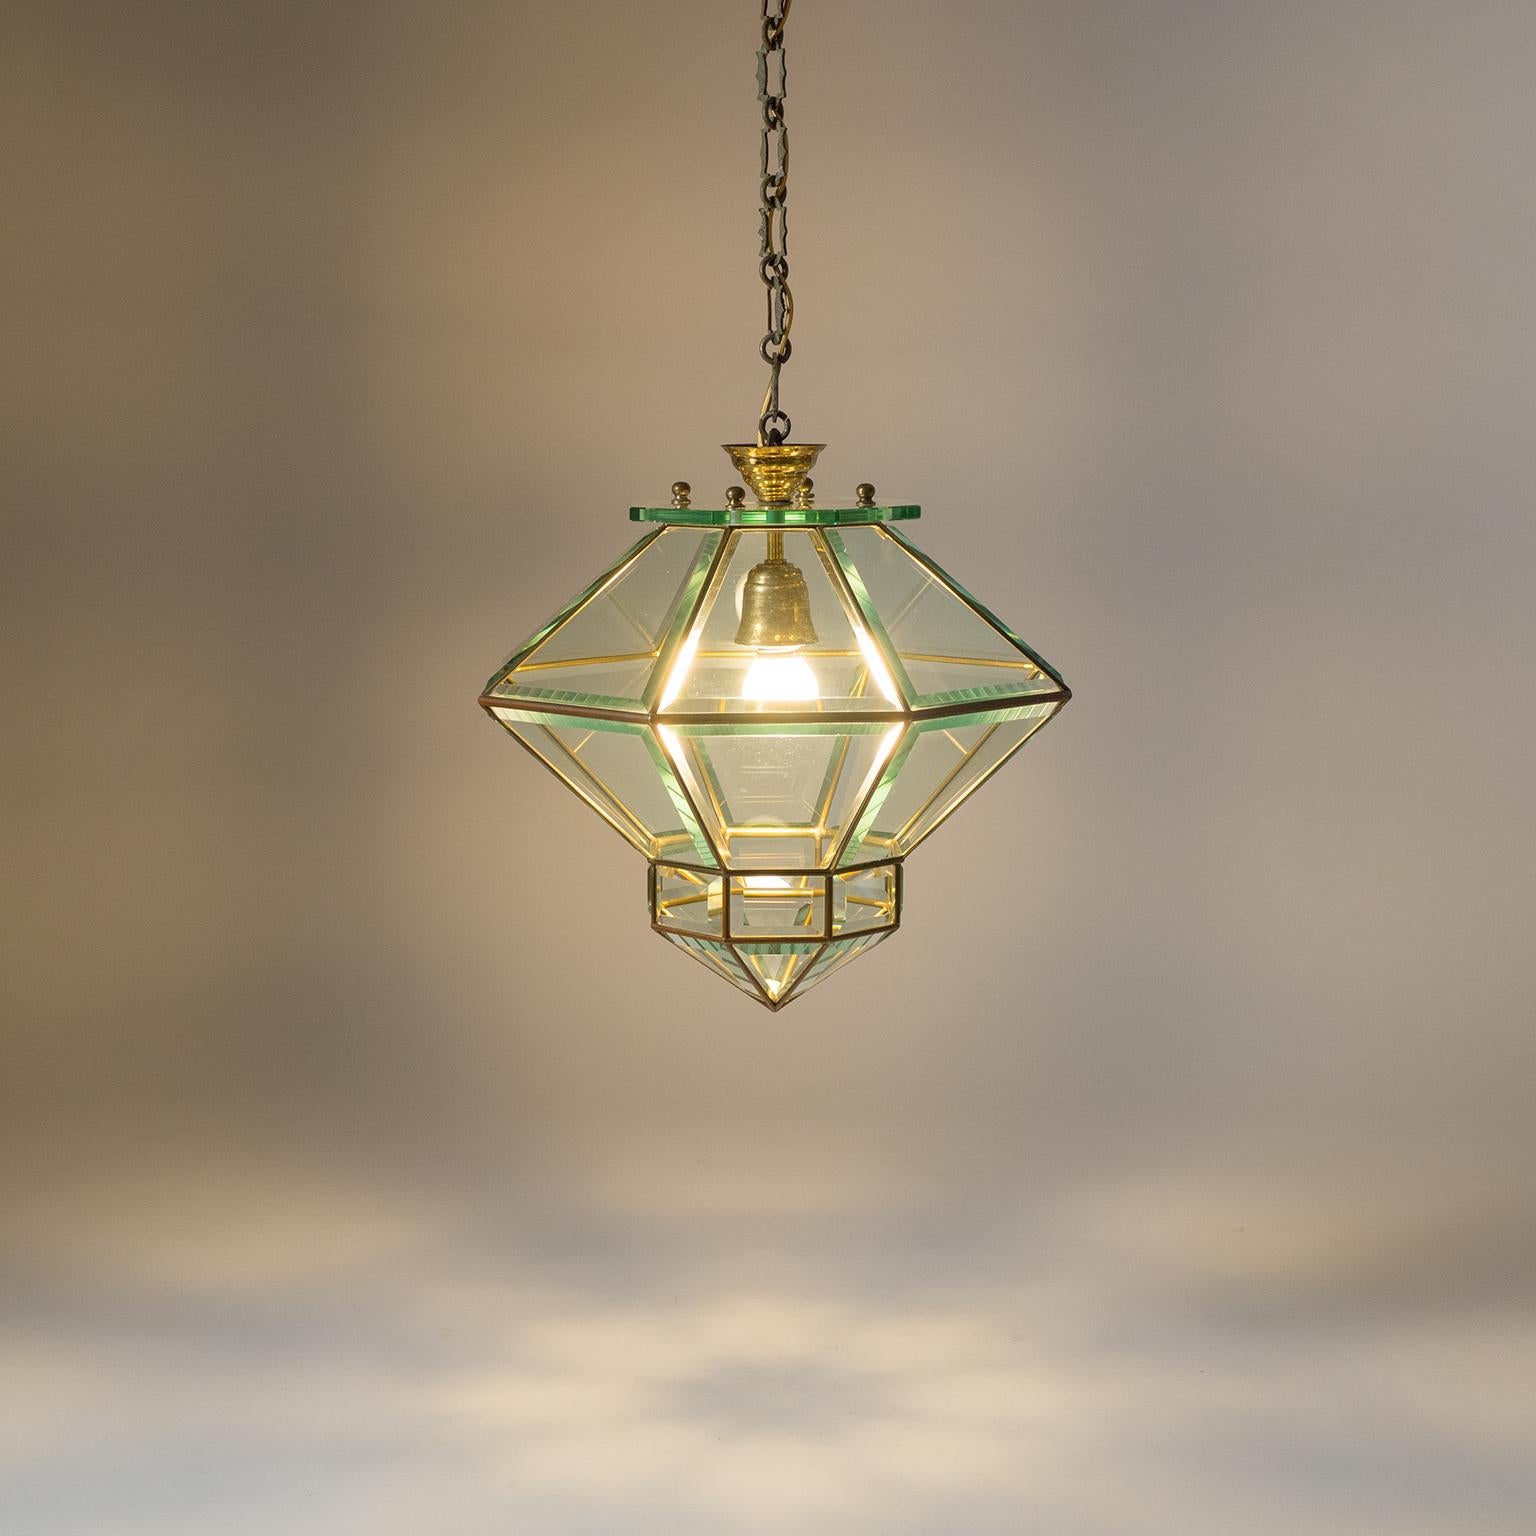 Italian 1940s Lantern, Faceted Glass and Brass (Facettiert)